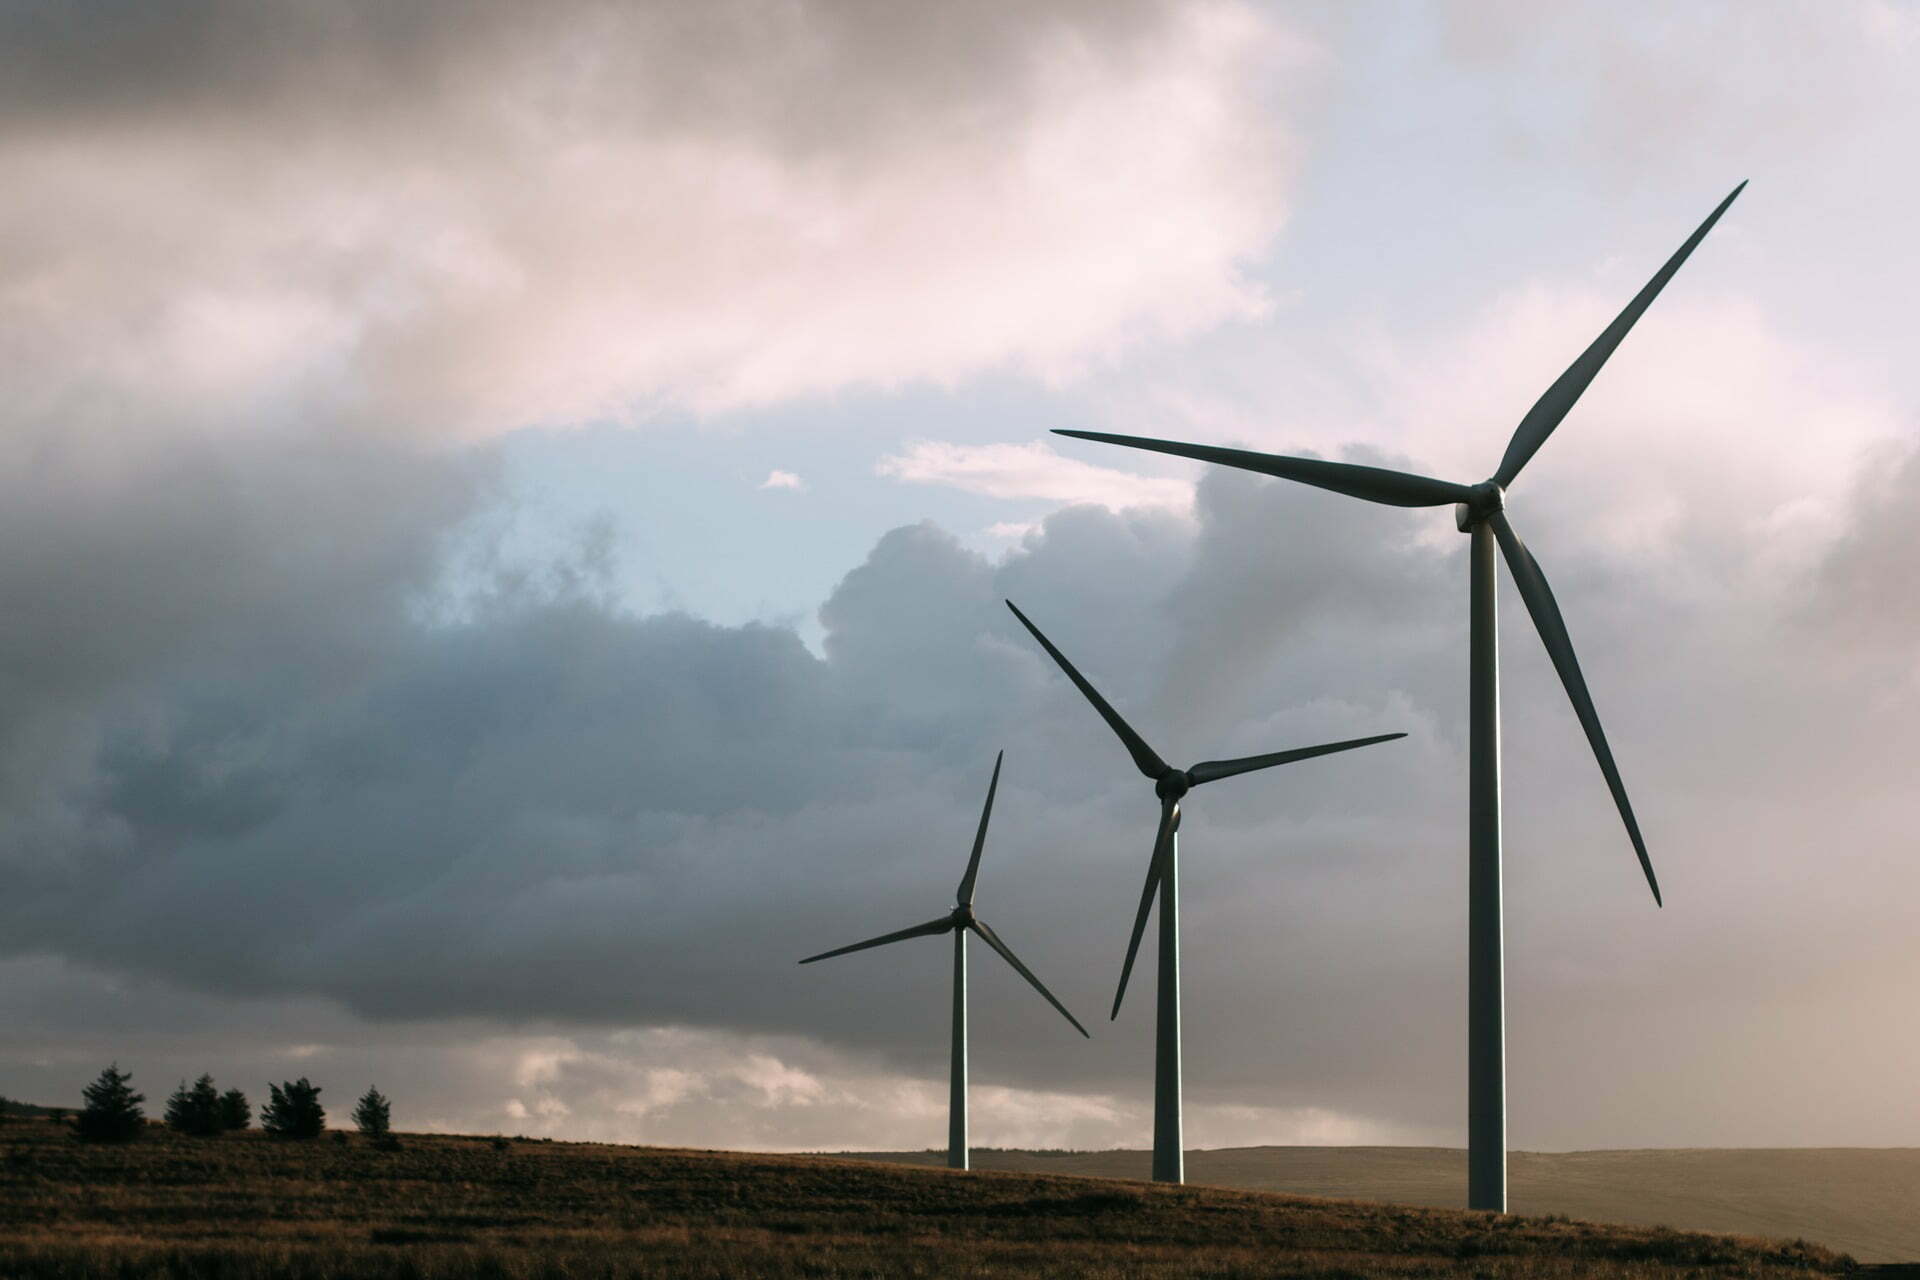 windmills g3ad49c4f8 1920 Tasmania’s Already Reached Net-zero and 100% Renewables. So What's Next?